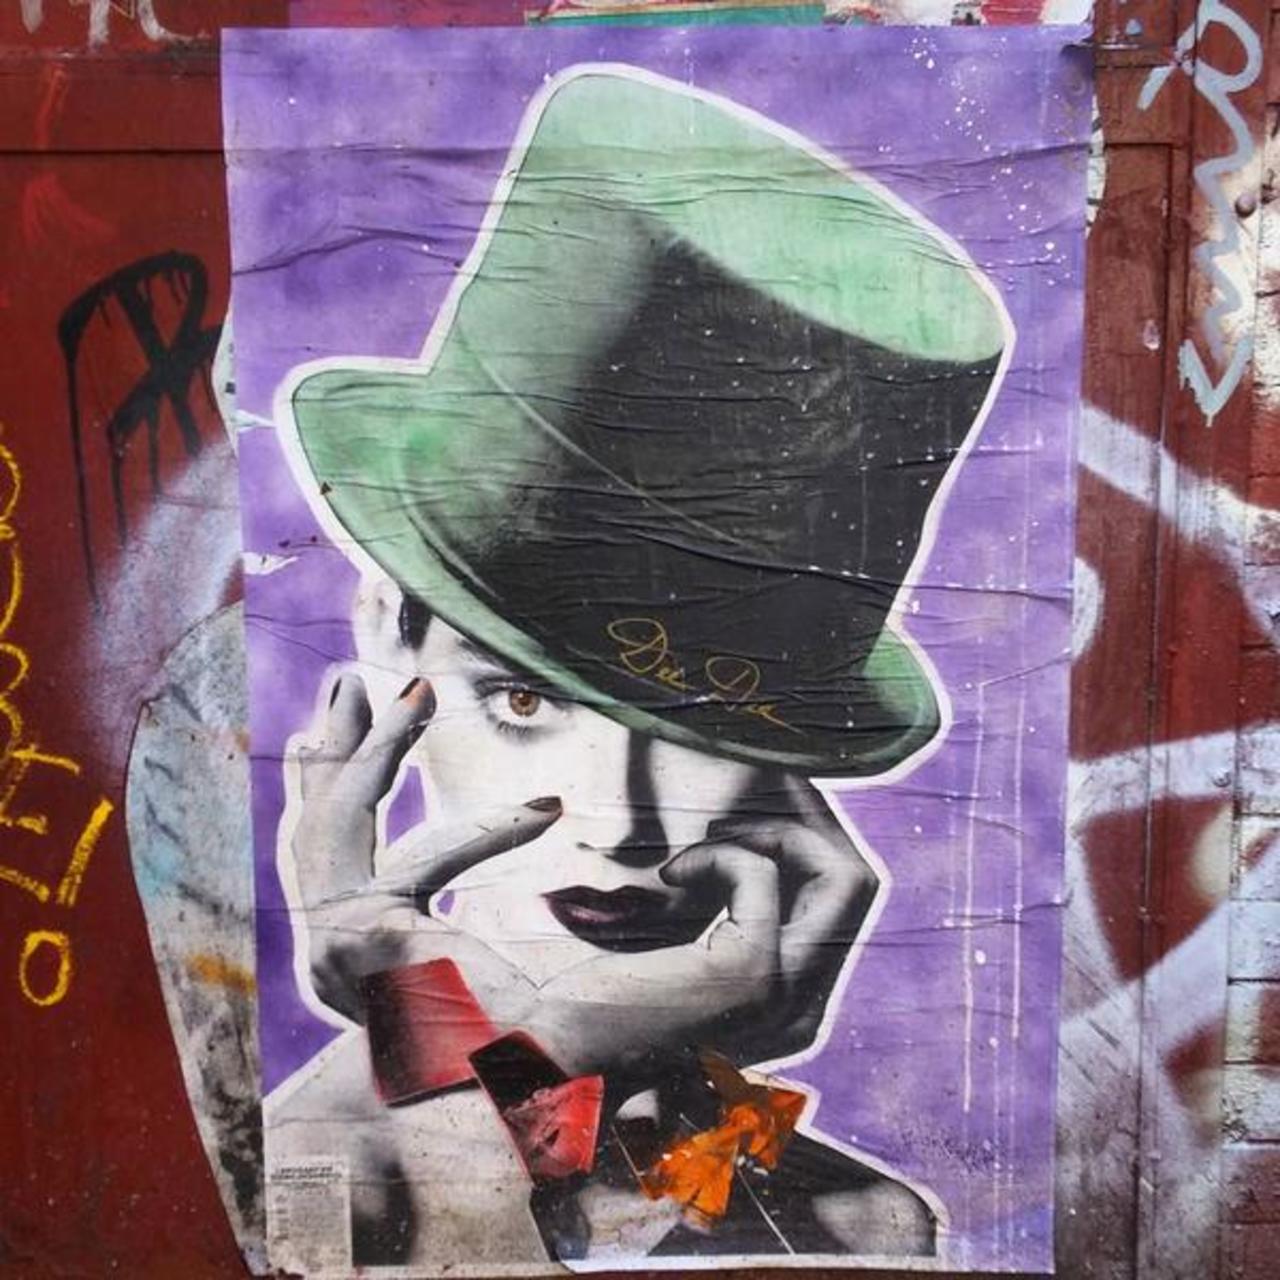 RT @PasteUpArt: Pasteup #graffiti in New York, USA (photo @kevinmichaelnyc) https://instagram.com/p/8pxoVDm3p4/ #StreetArt #NYC via @circumjacent http://t.co/idf4w9BMgK